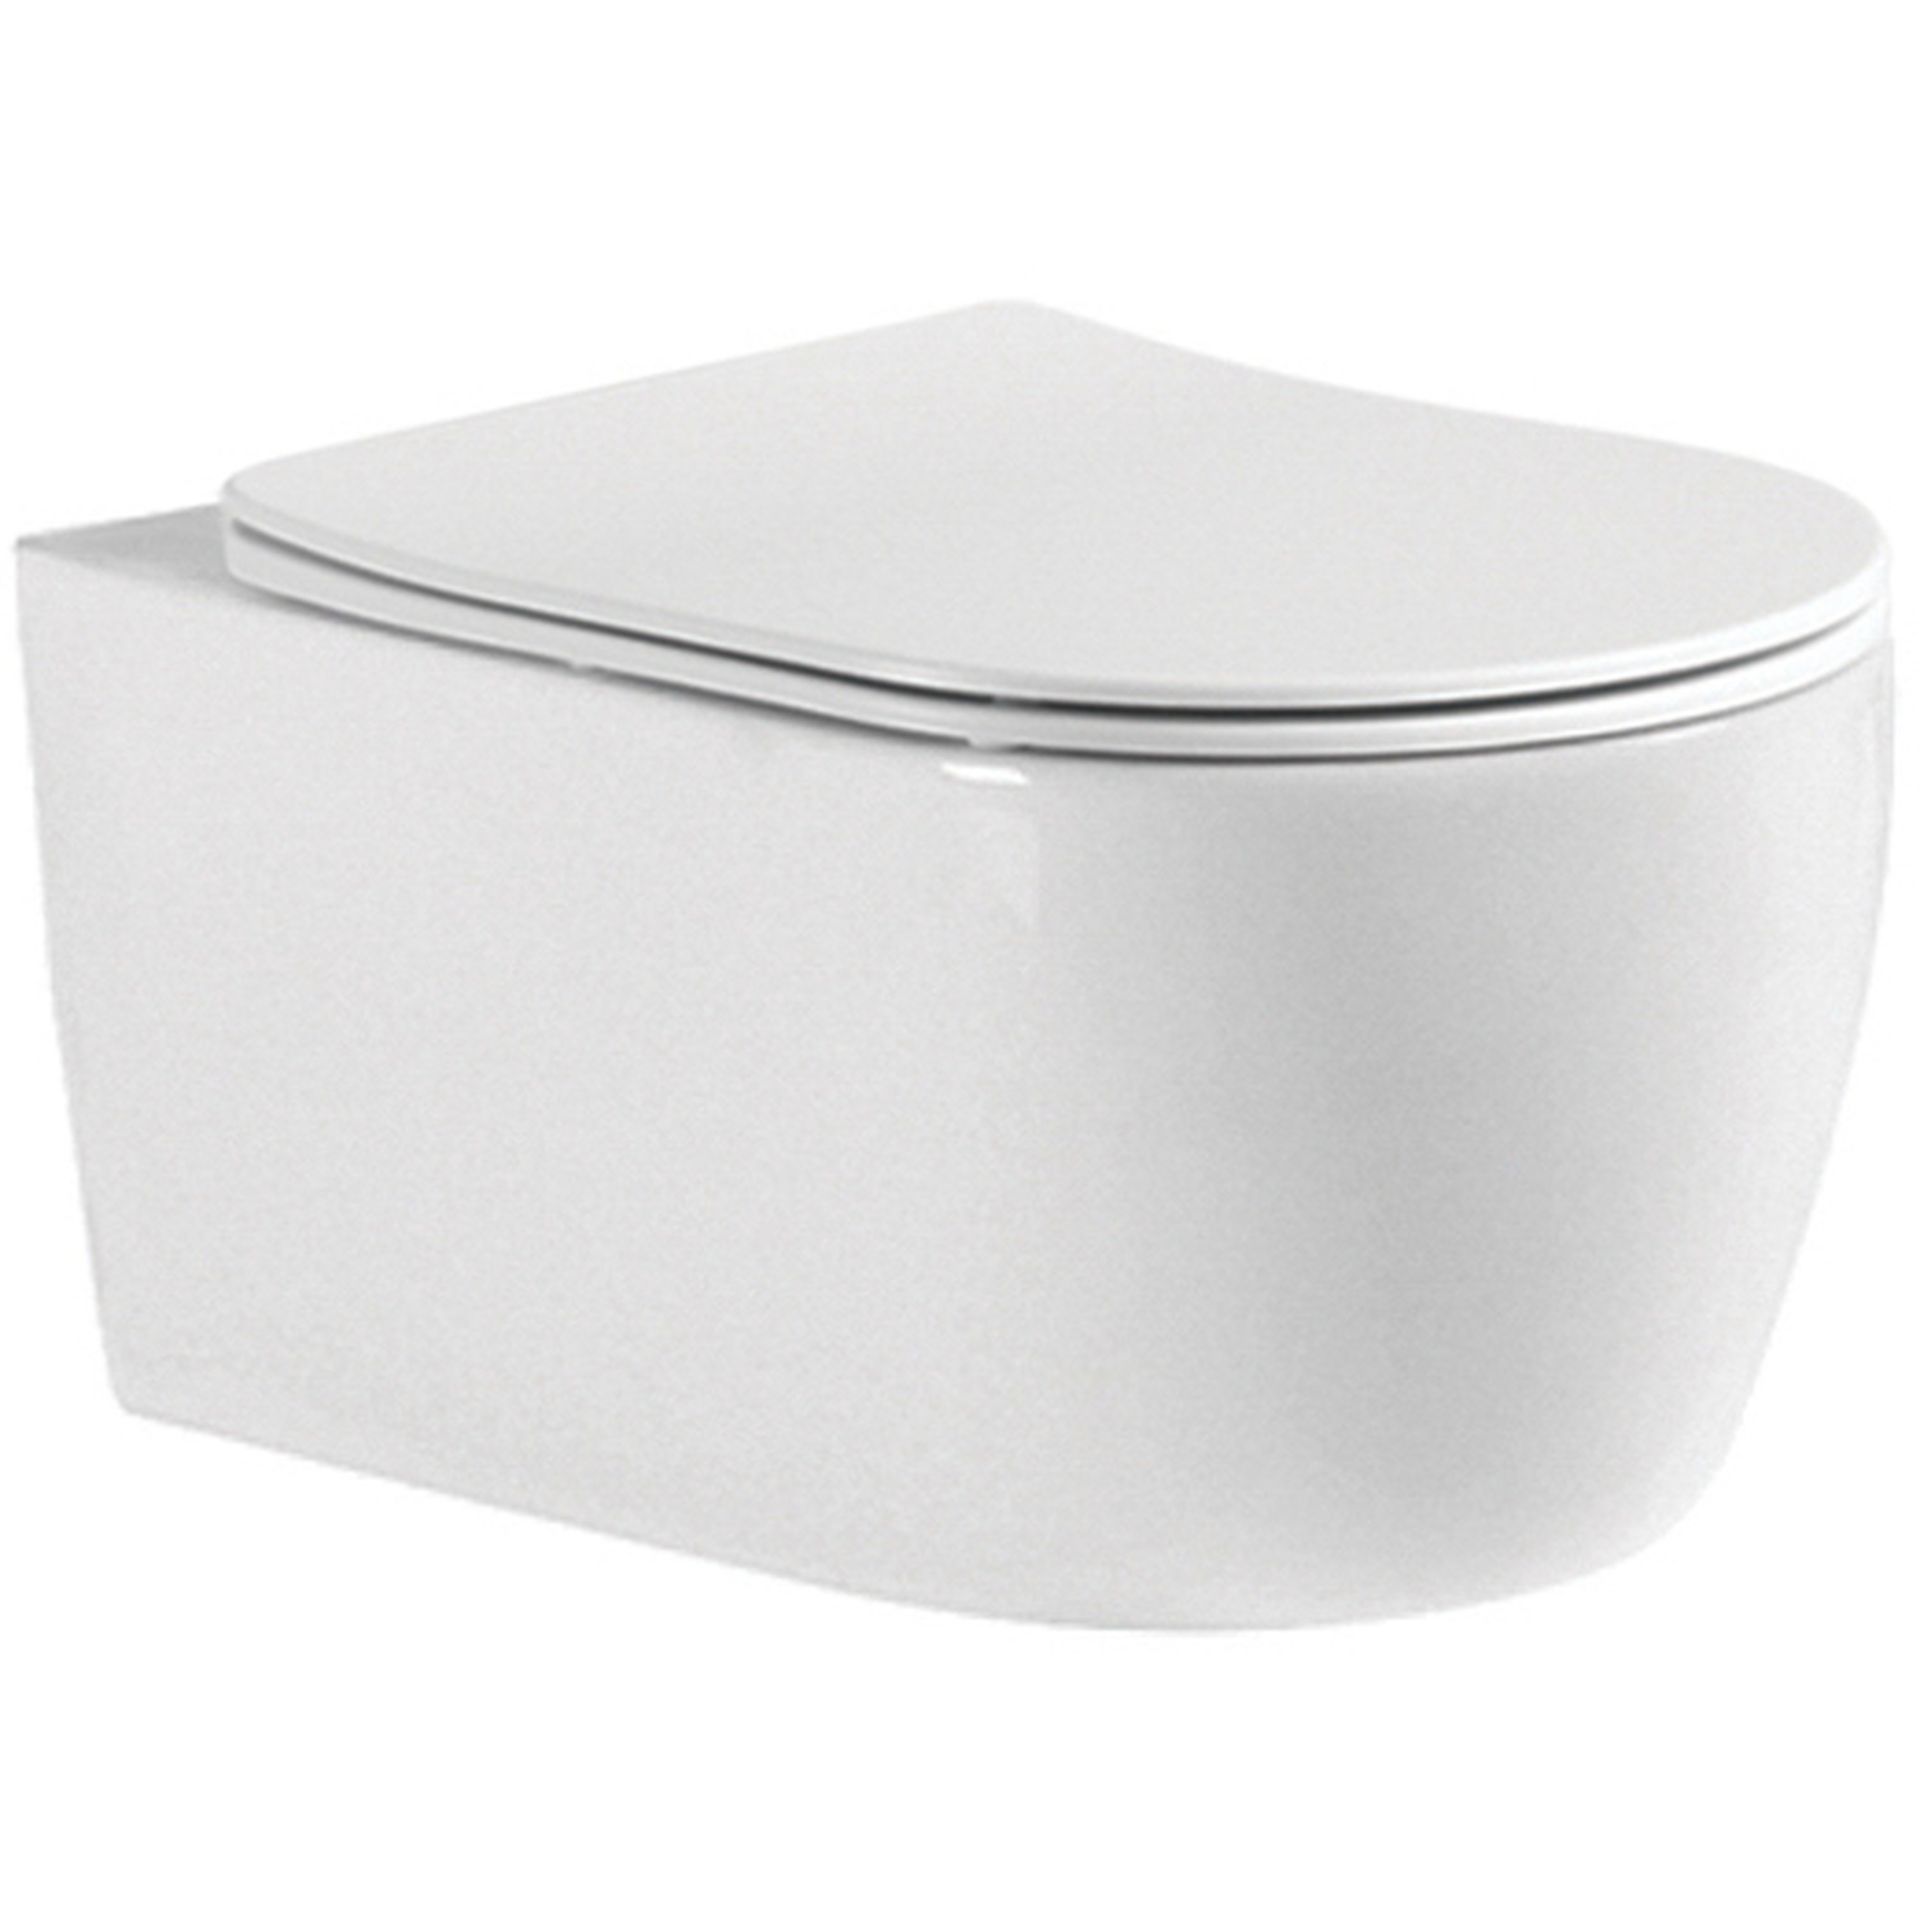 NEW & BOXED KARCENT Rimless Wall Hung Toilet WHITE. This Rimless Matt White wall-hung toilet has a